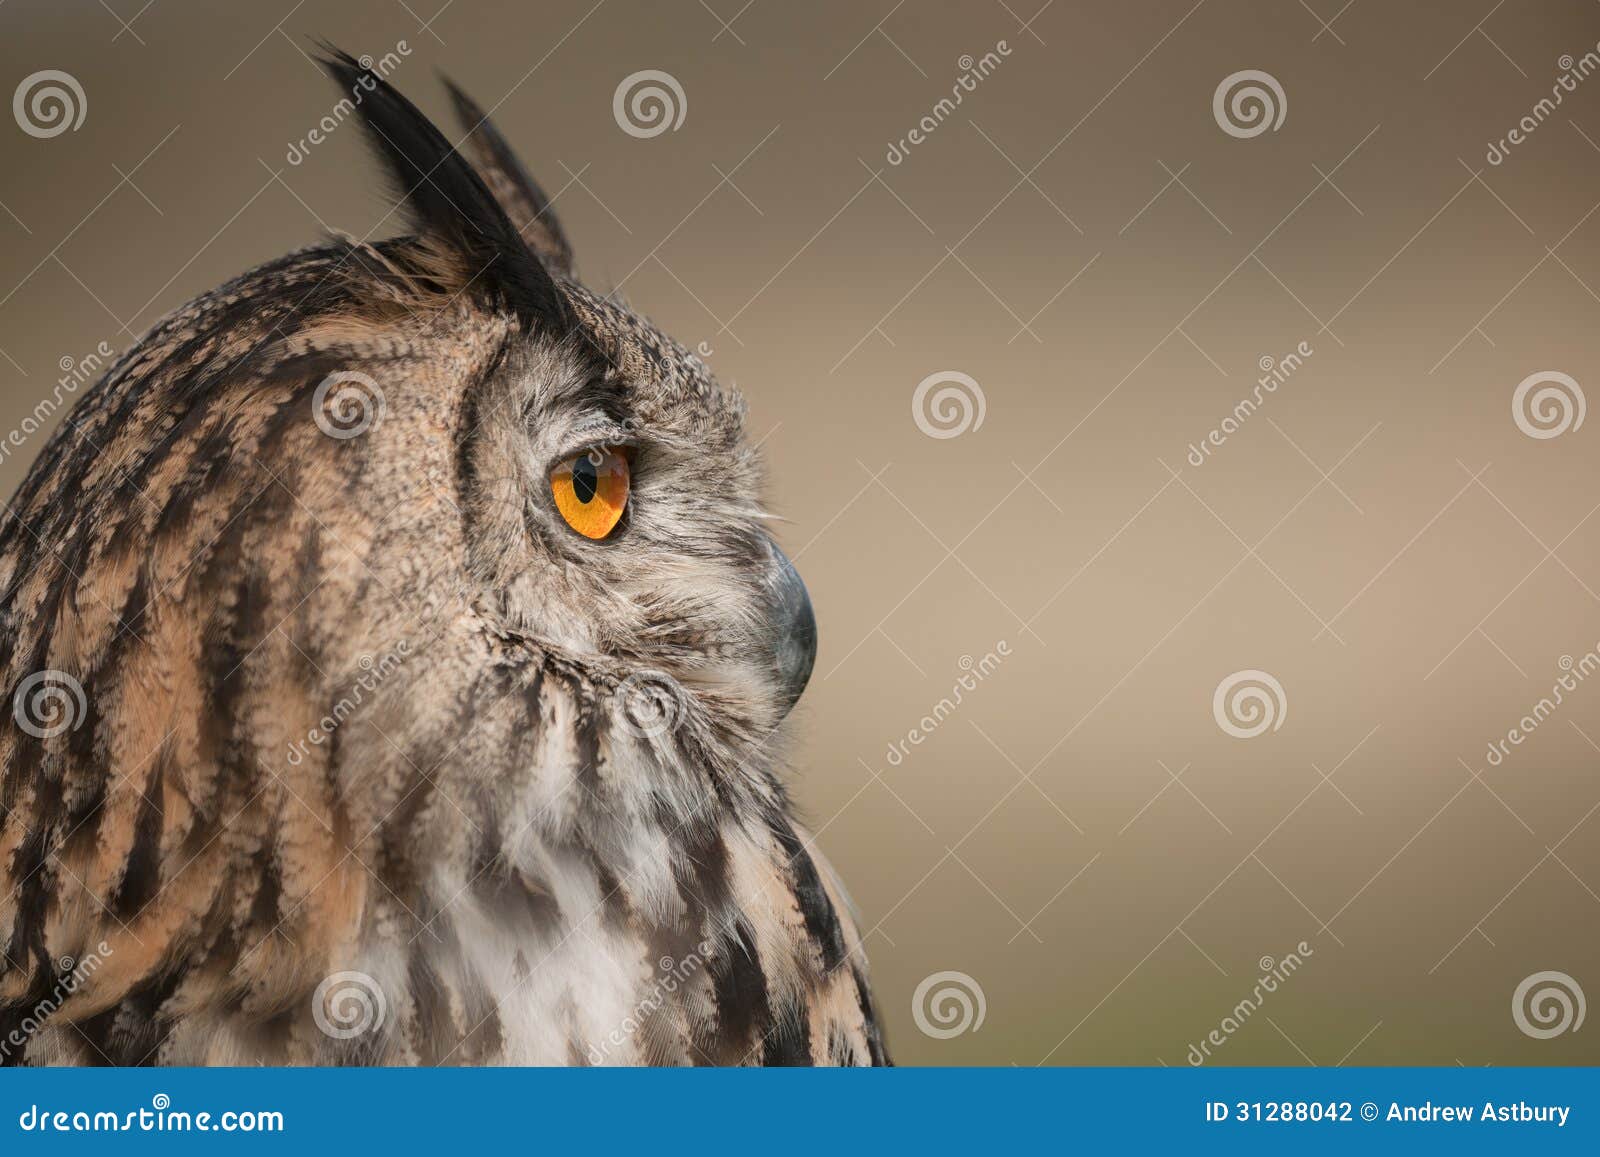 Eagle Owl stock photo. Image of eagle, feathers, animal - 31288042